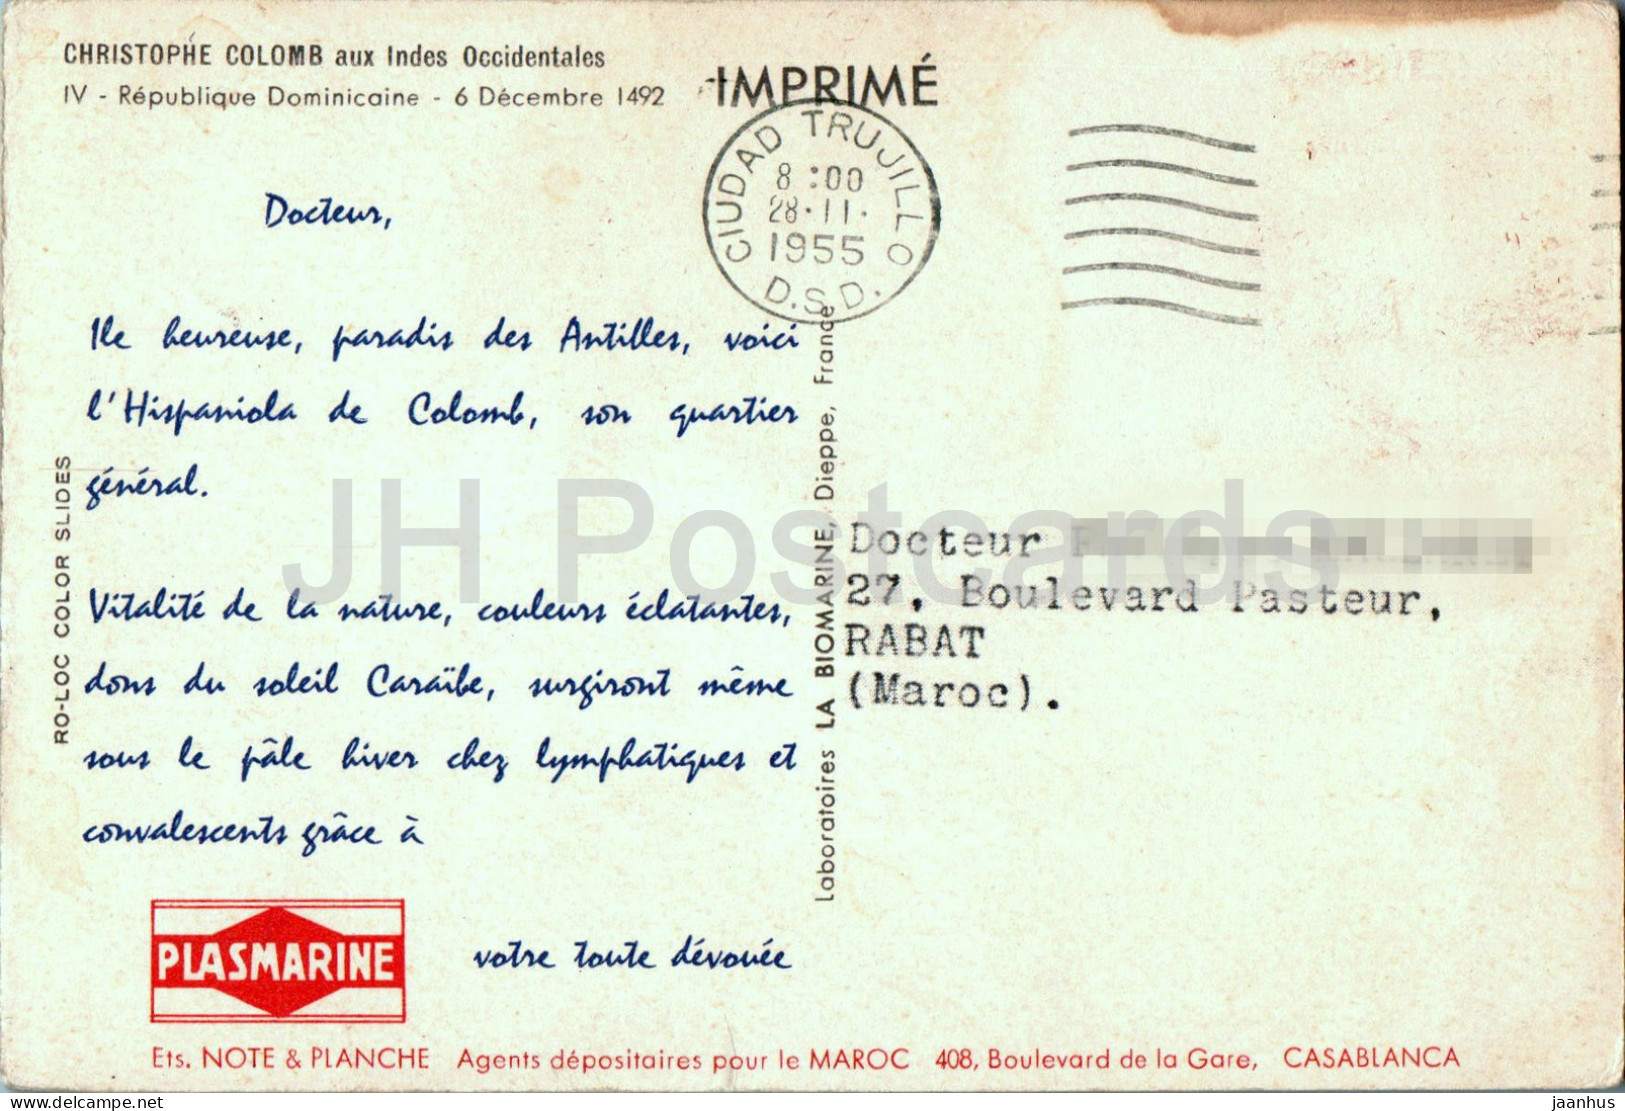 Christophe Colomb Aux Indes Occidentales - Plasmarine - Old Postcard - 1955 - Dominican Republic - Used - Dominicaine (République)